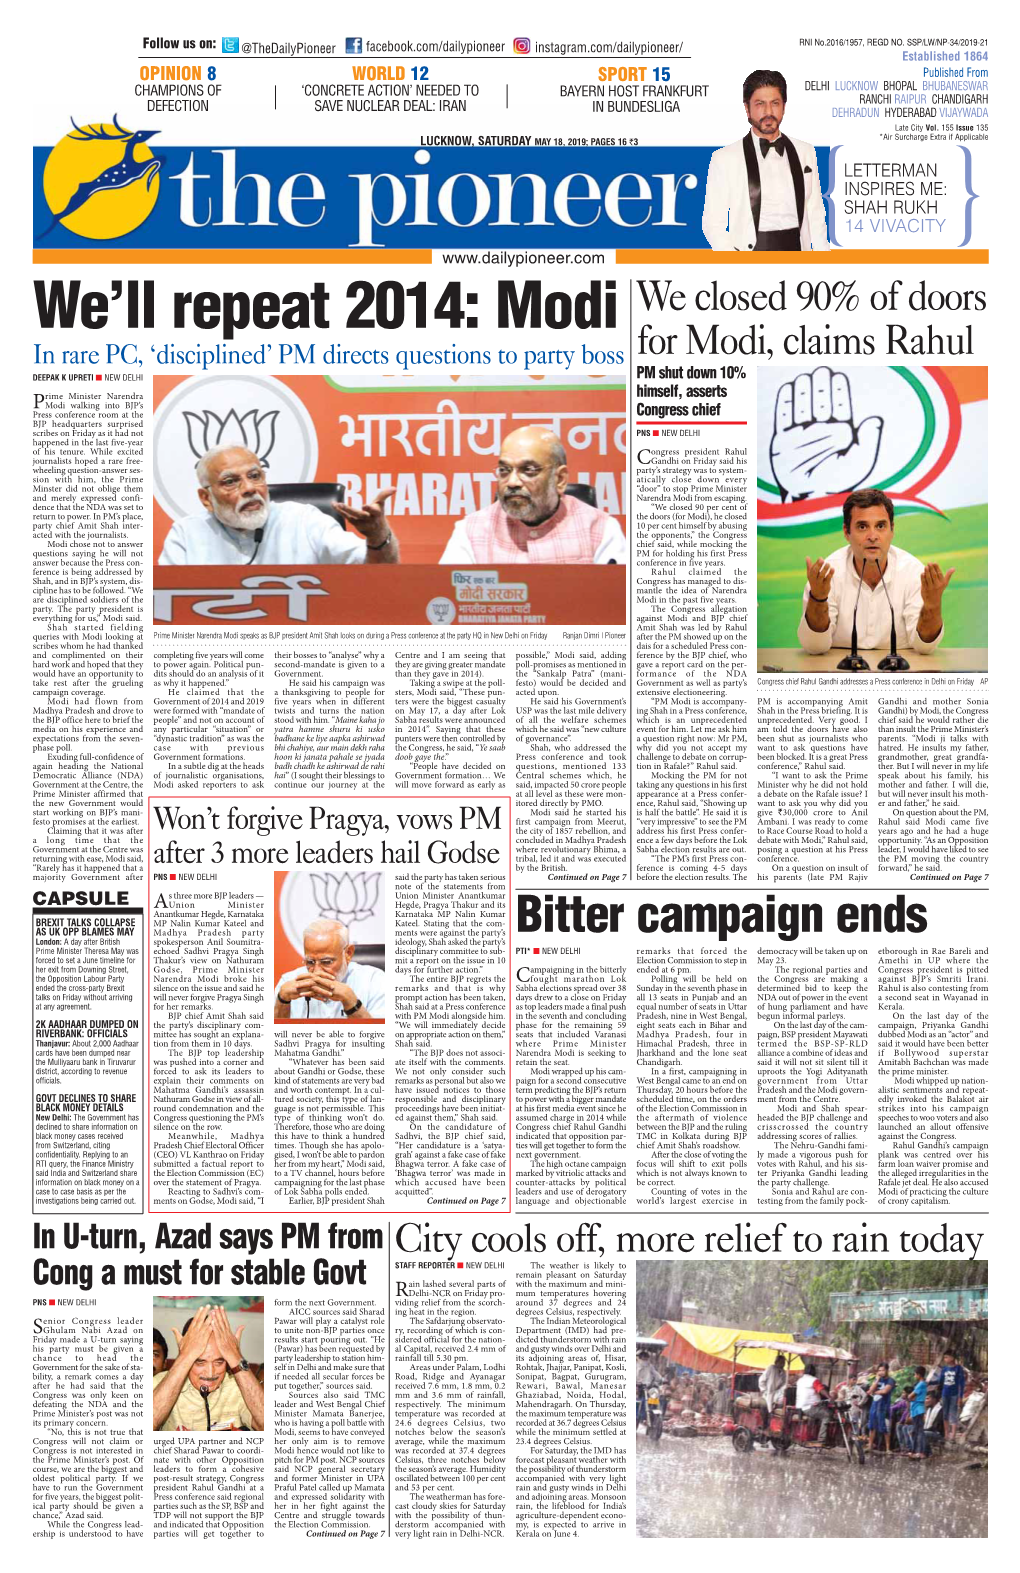 We'll Repeat 2014: Modi